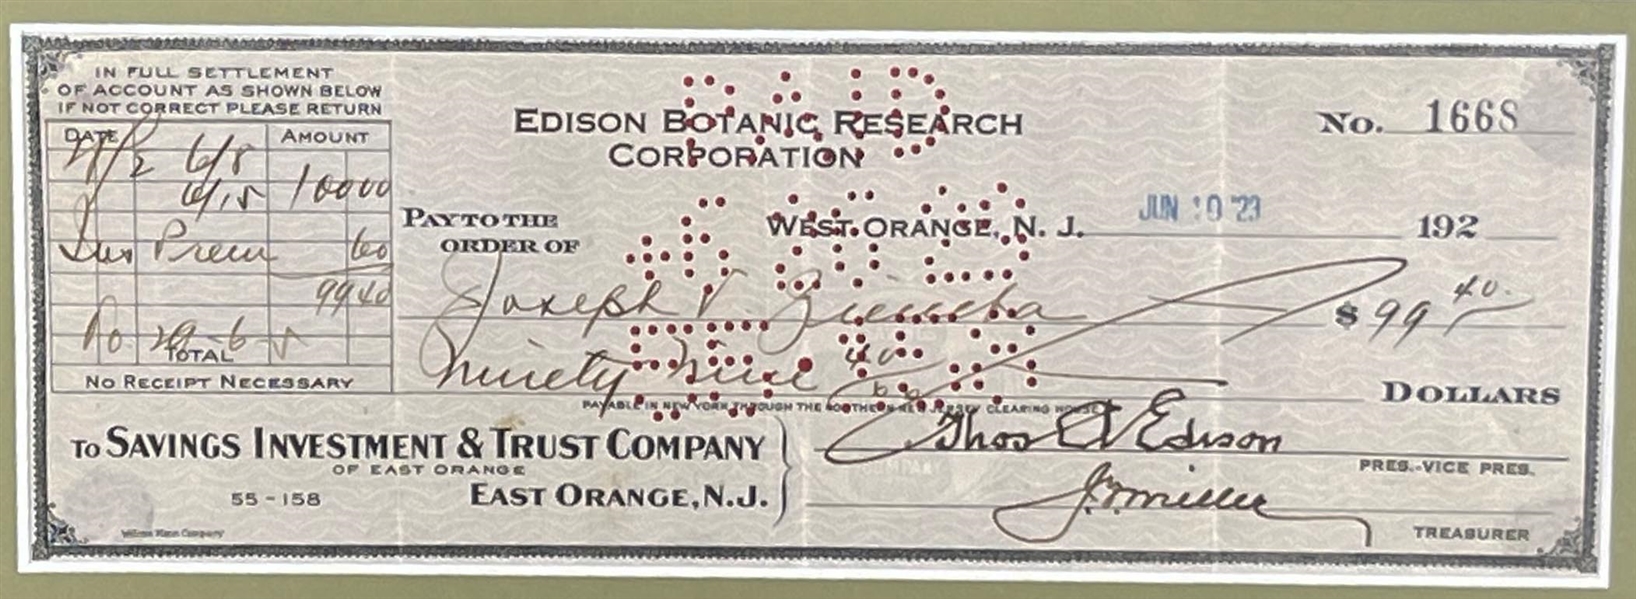 Thomas Edison Signed Edison Botanic Research Corporation Check